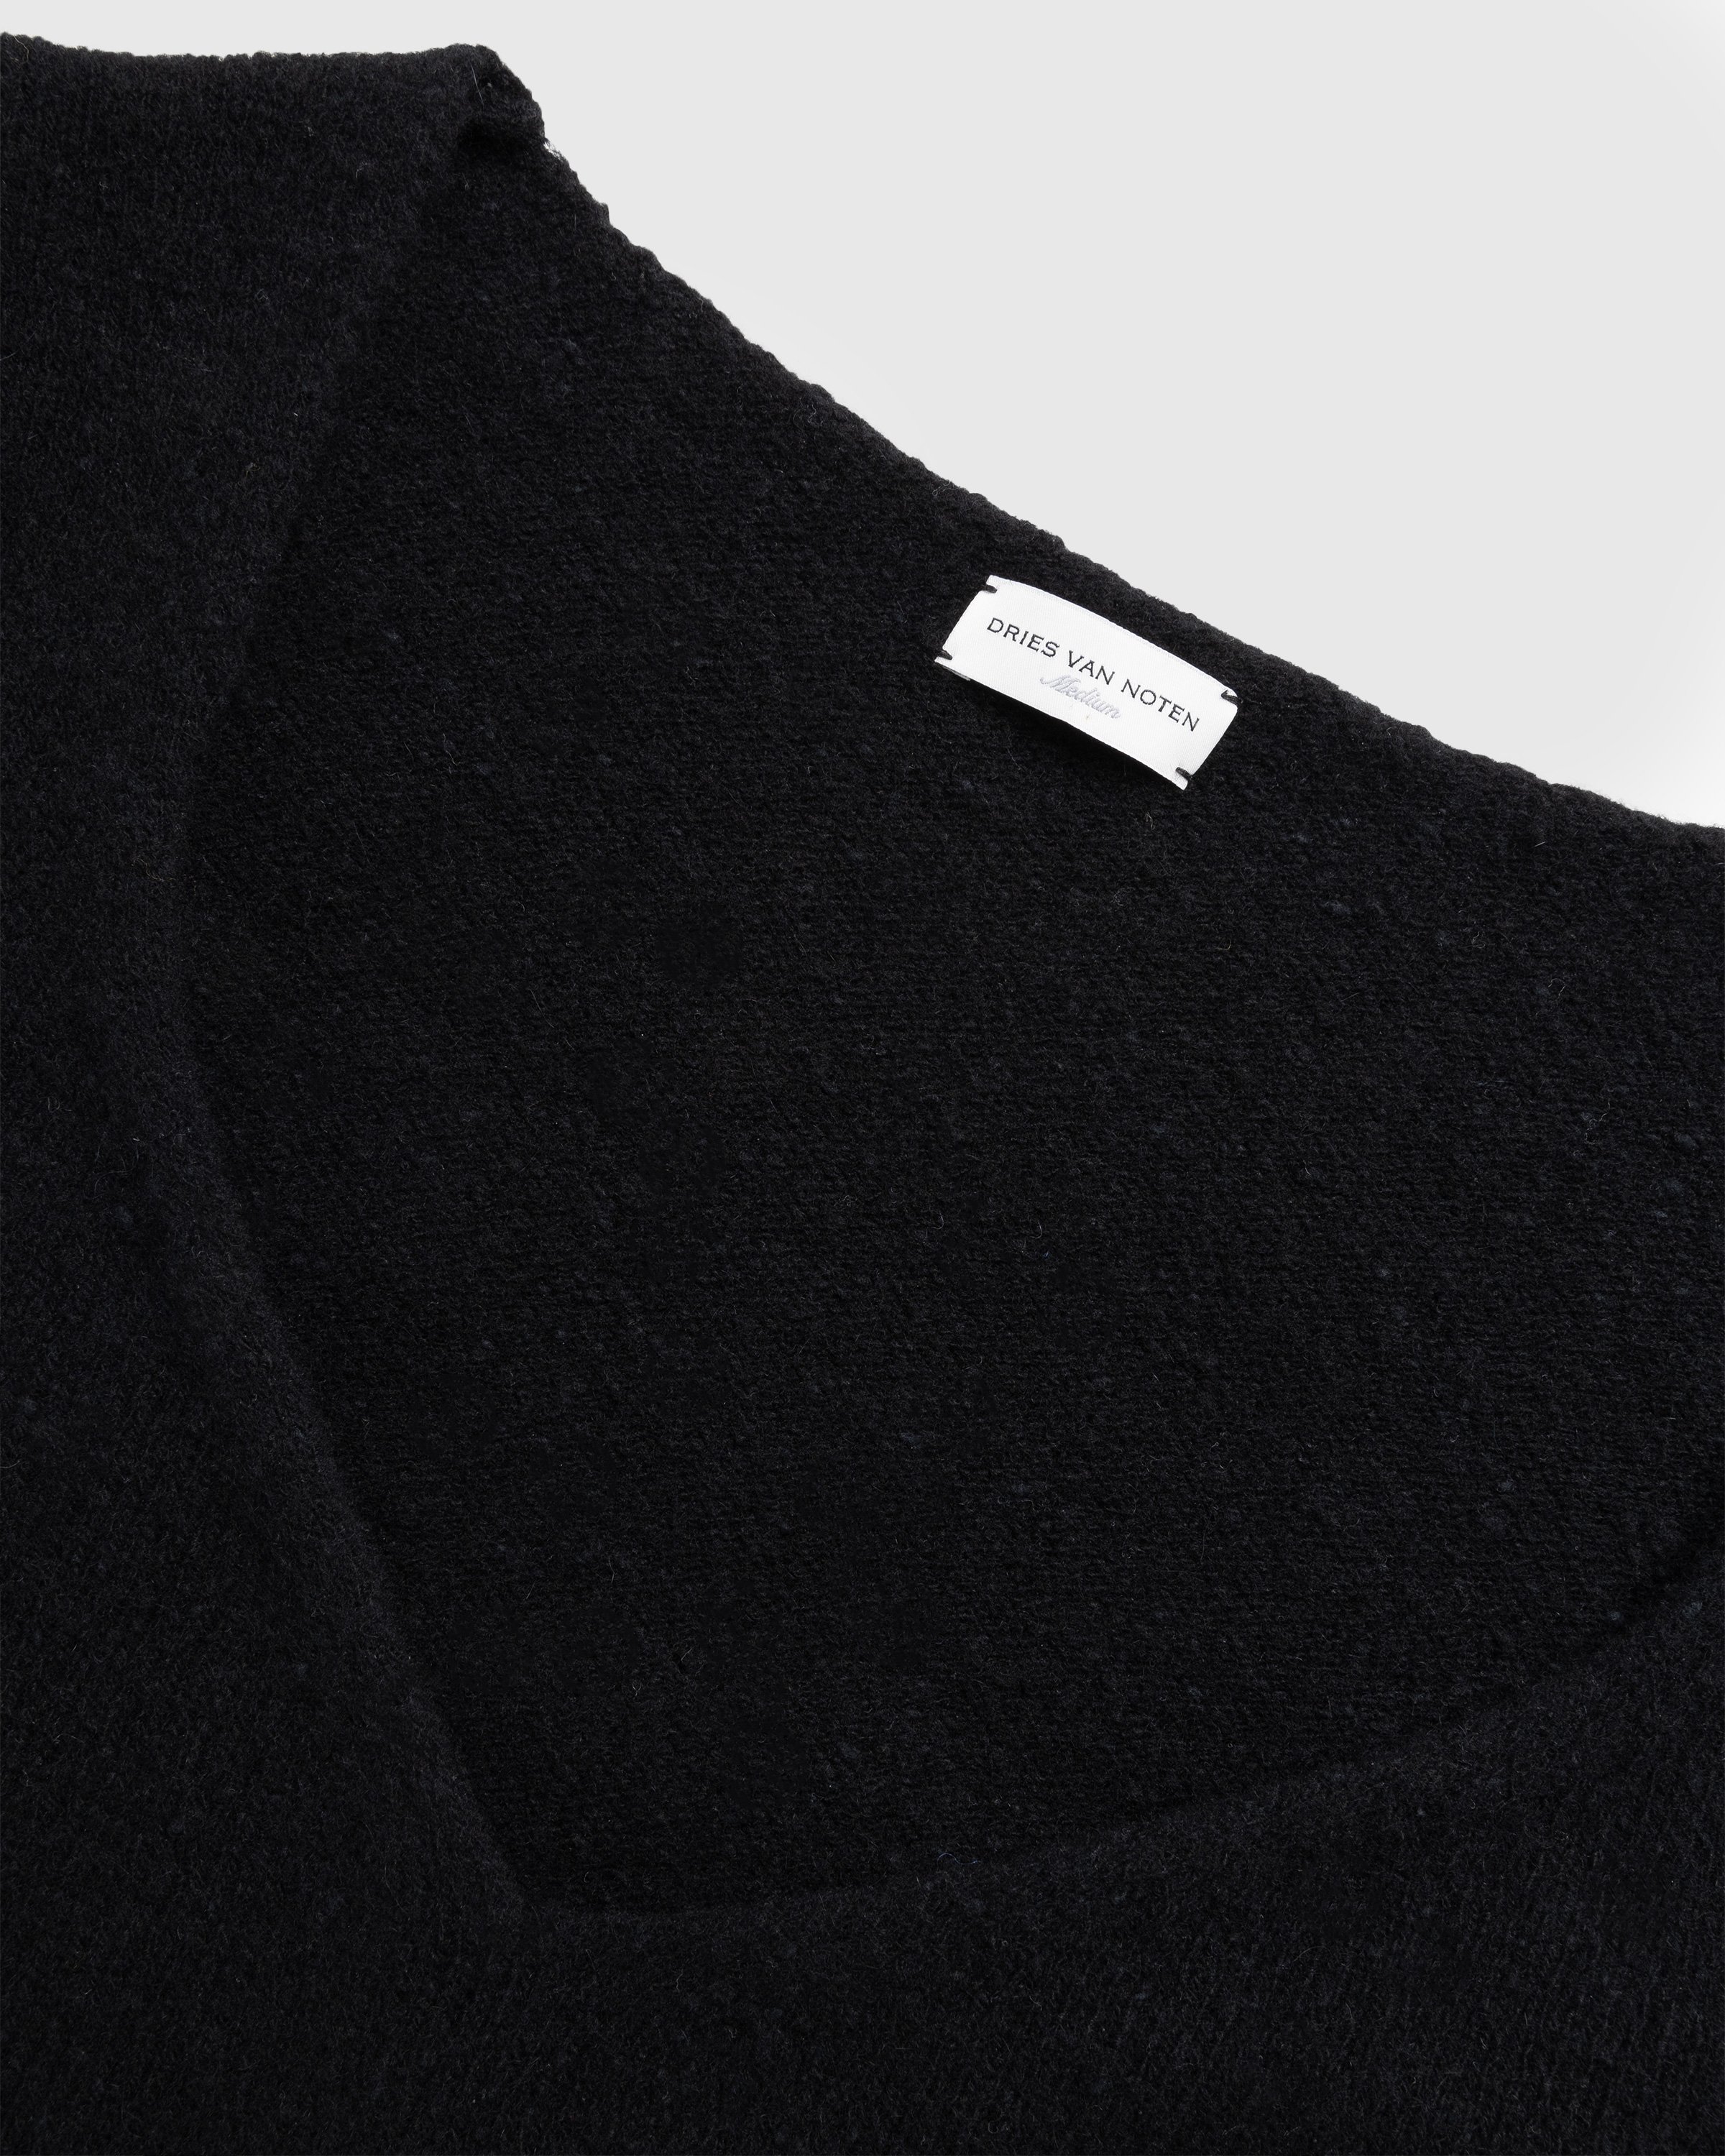 Dries van Noten - Meron Knit Black - Clothing - Black - Image 4